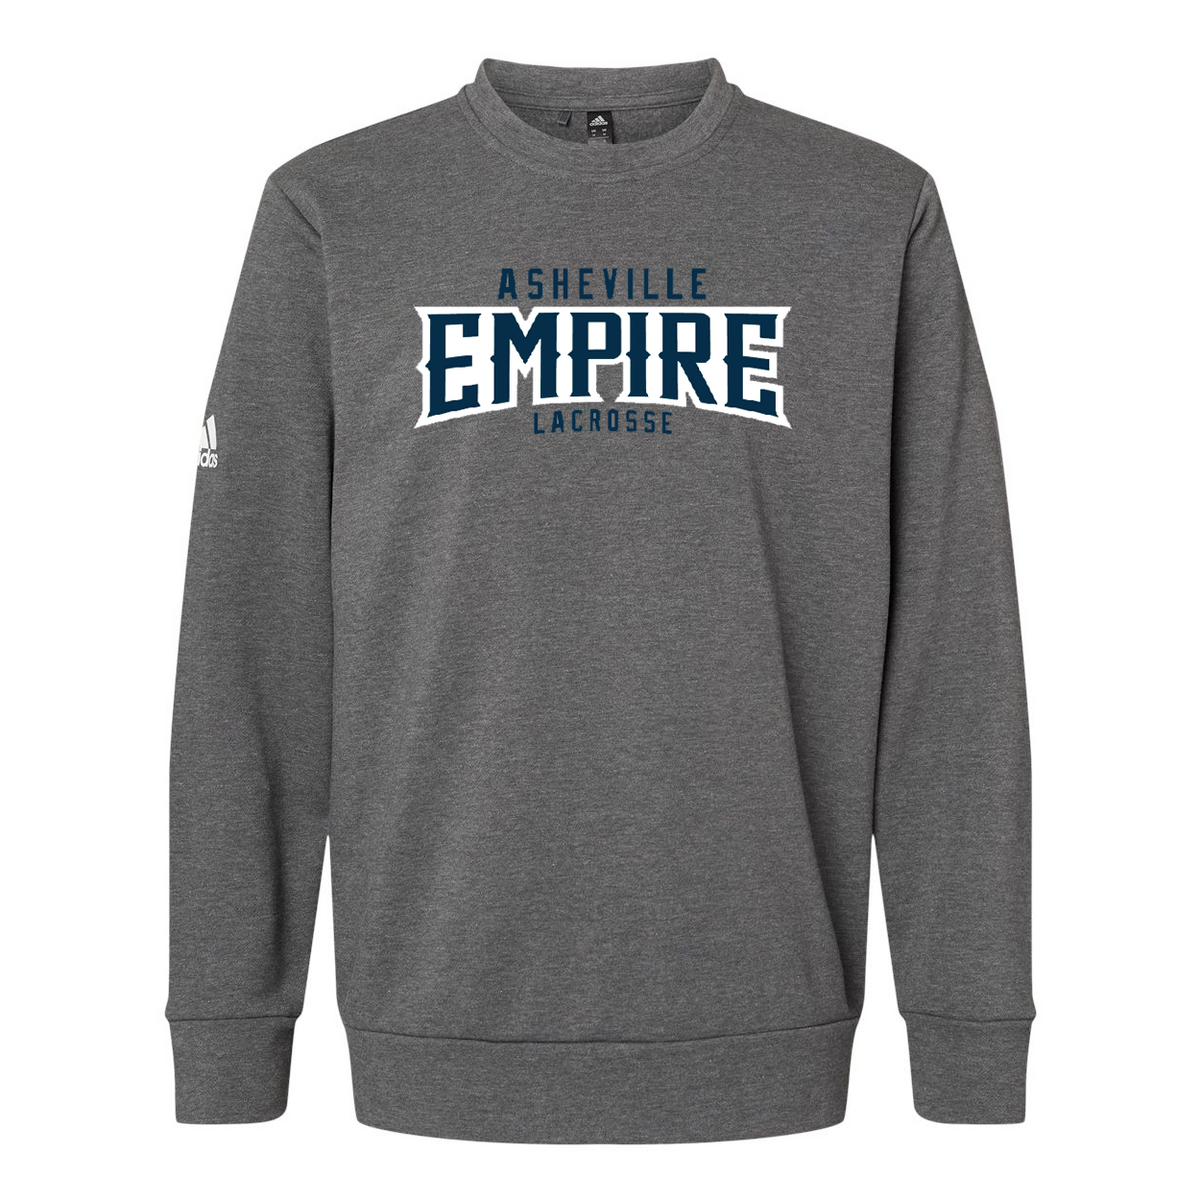 Asheville Empire Lacrosse Adidas Fleece Crewneck Sweatshirt